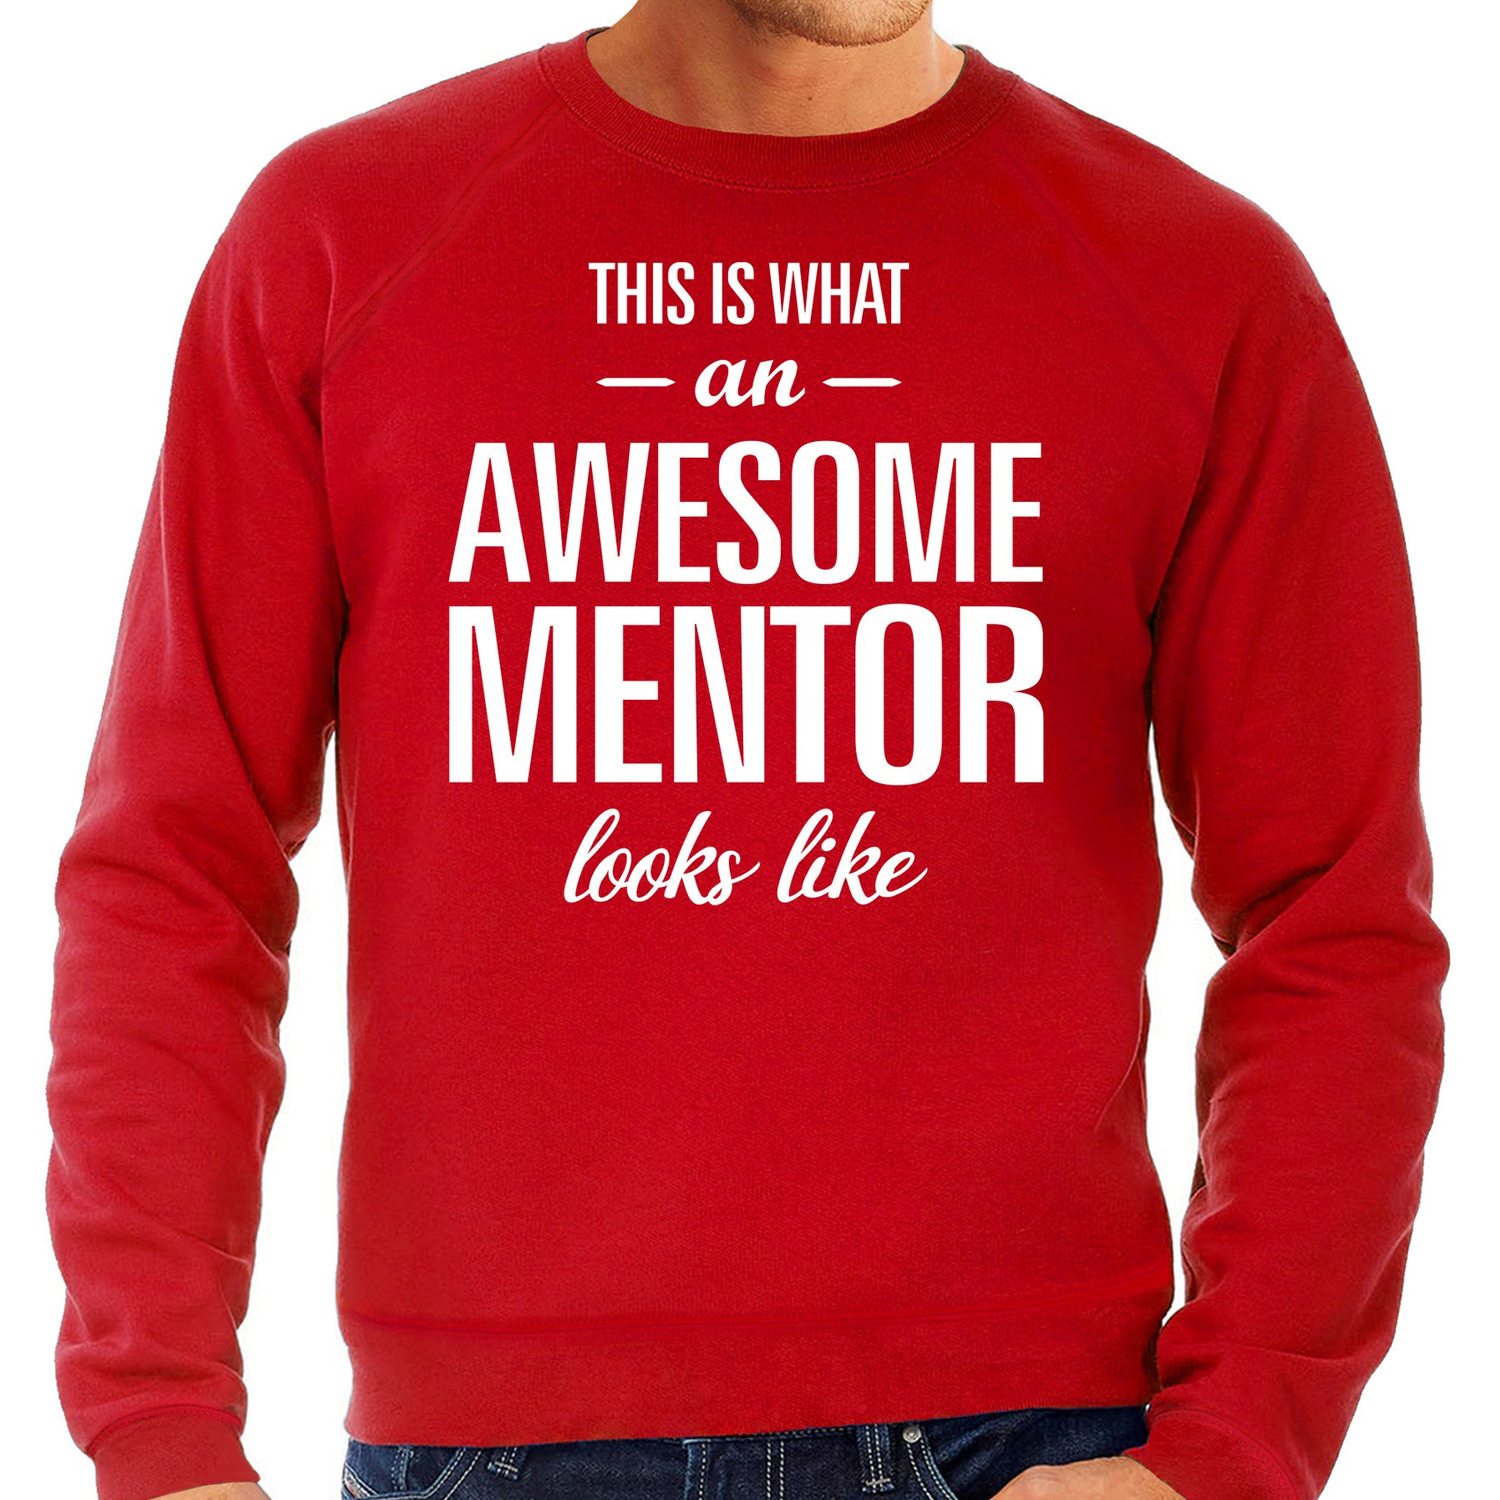 Awesome mentor-leermeester cadeau sweater rood heren